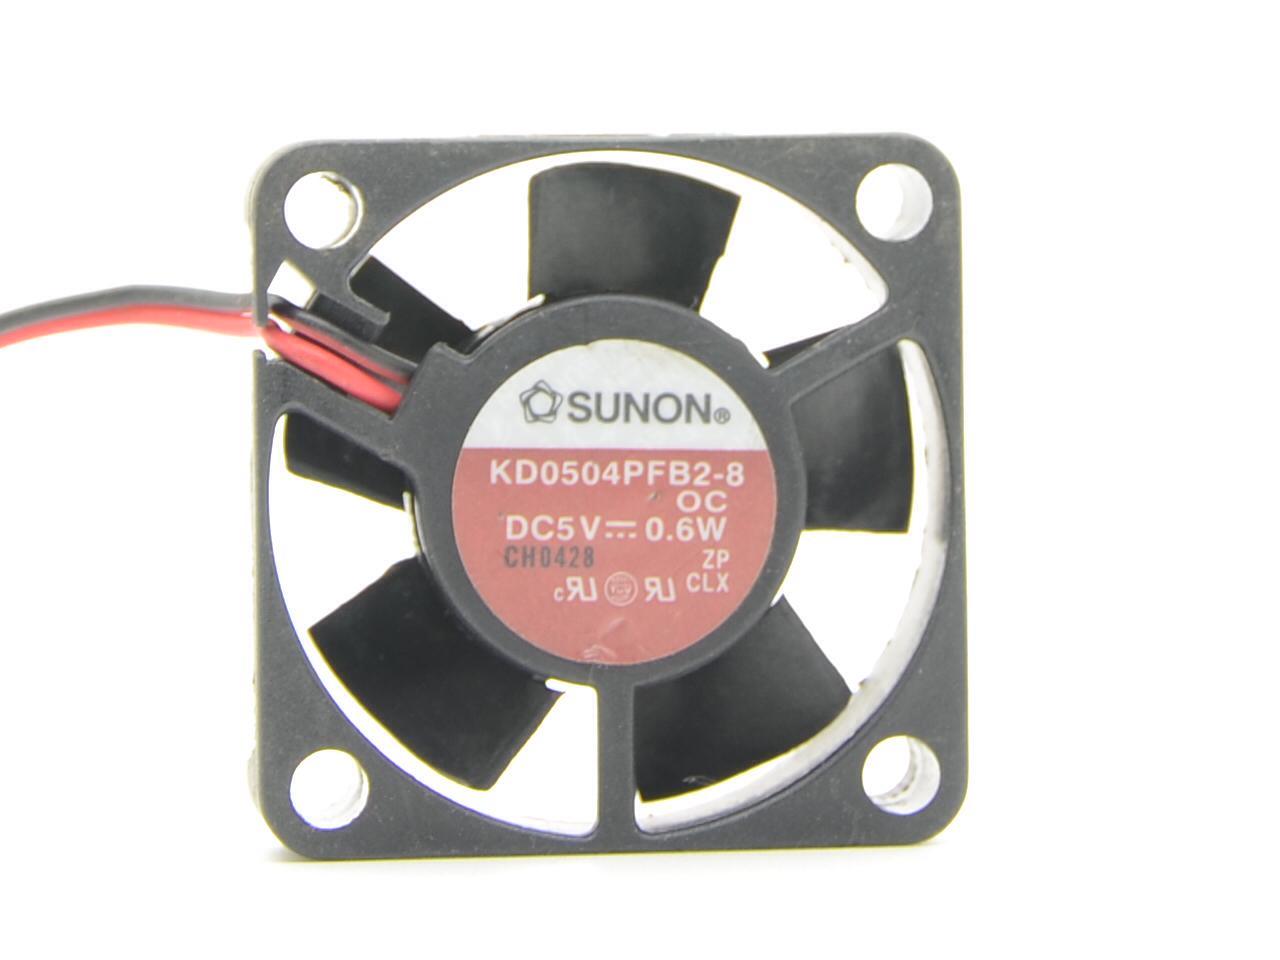 SUNON KD0504PFB2-8 40mm x 40mm x 10mm 4010 DC 5V 0.6W Cooling Fan 2pin Connector